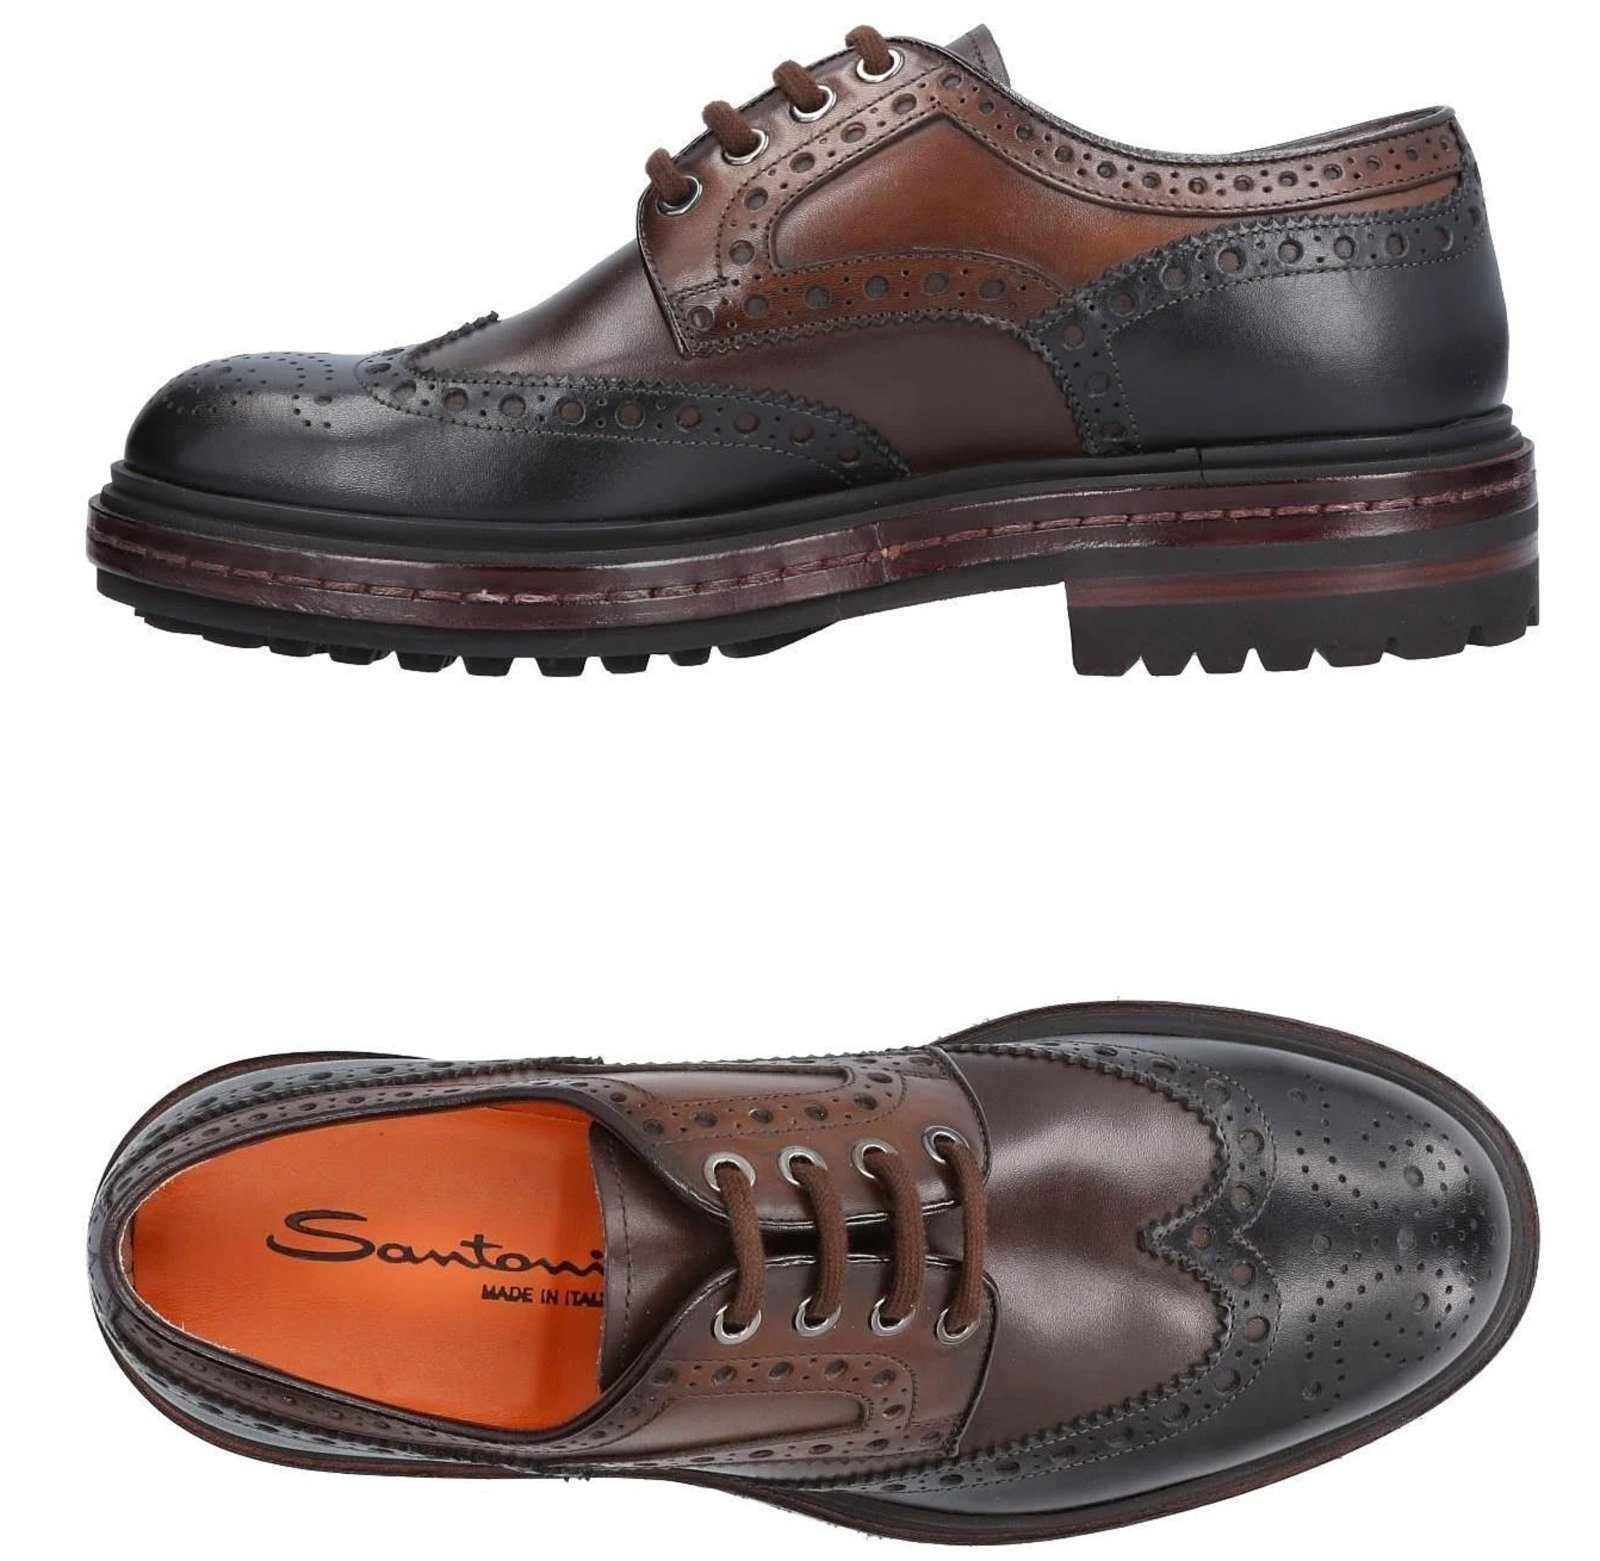 SANTONI Santoni Leder Schnürschuhe Lace-Up Shoes Boots Mokassins Взуття Halbsc Sneaker